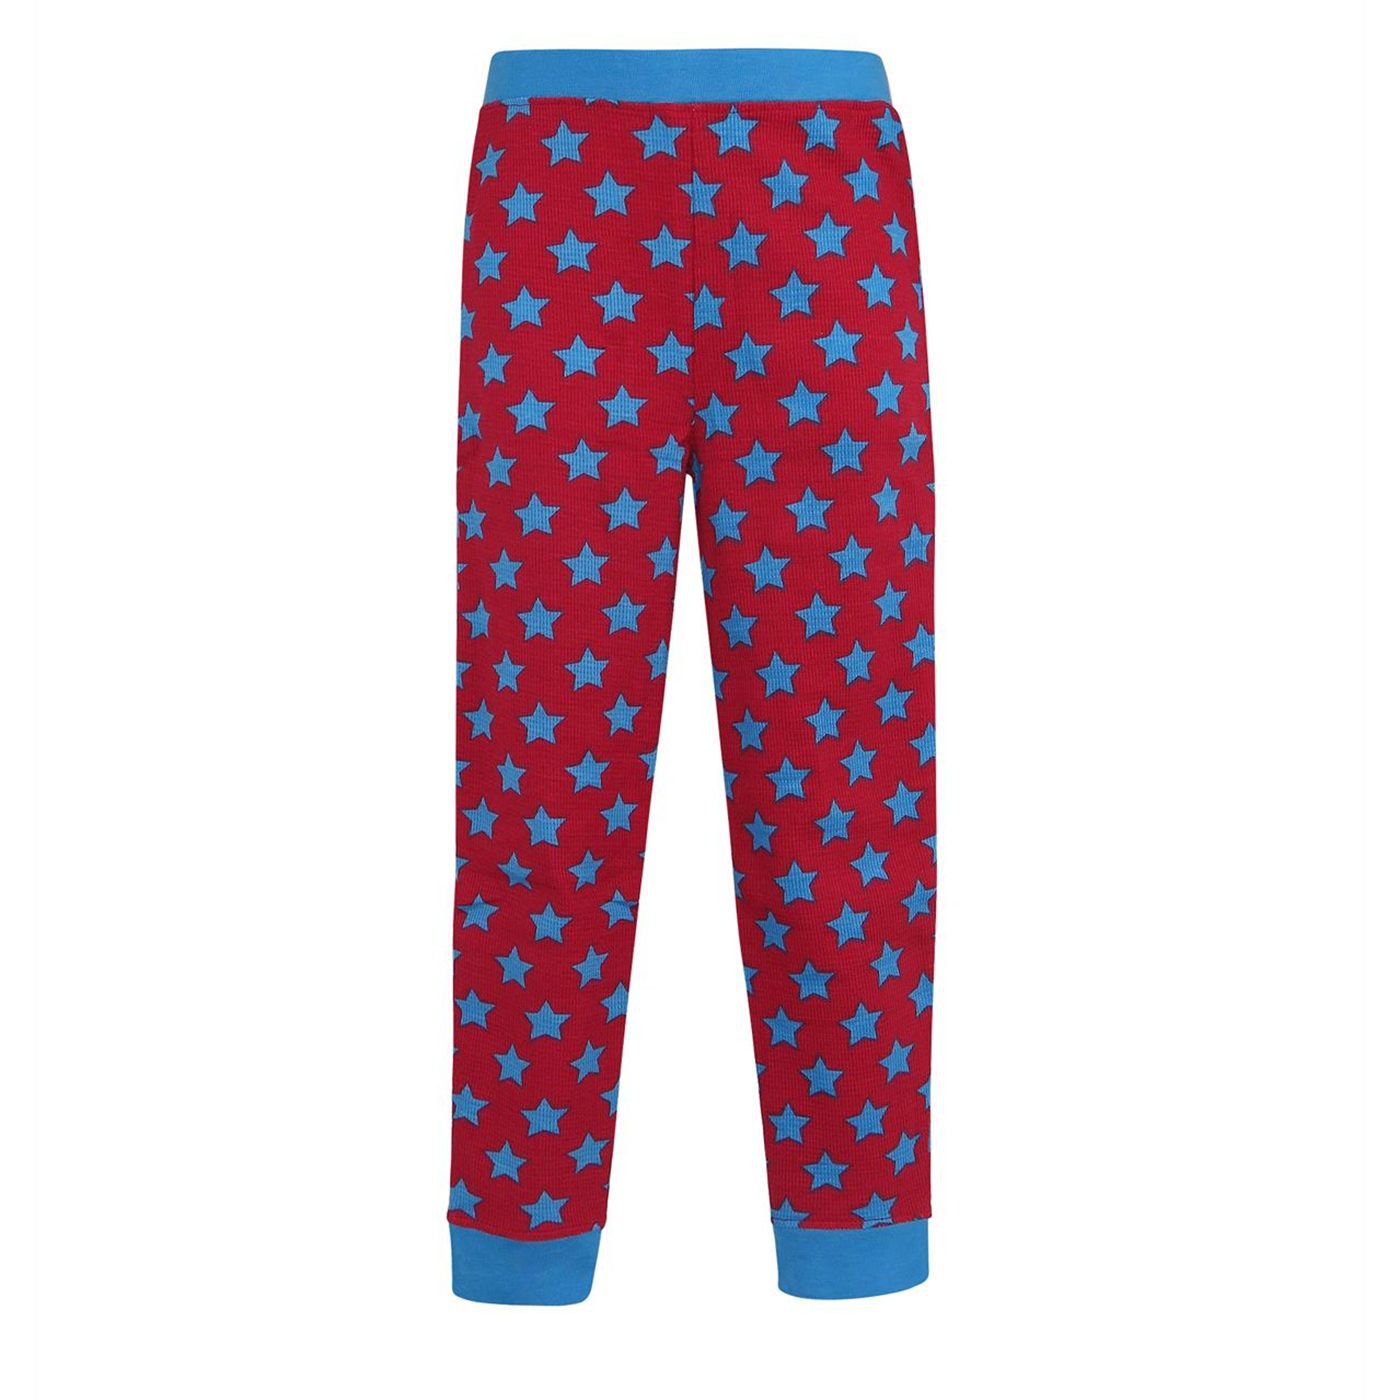 Supergirl Retro Girl's Thermal Pajama Set